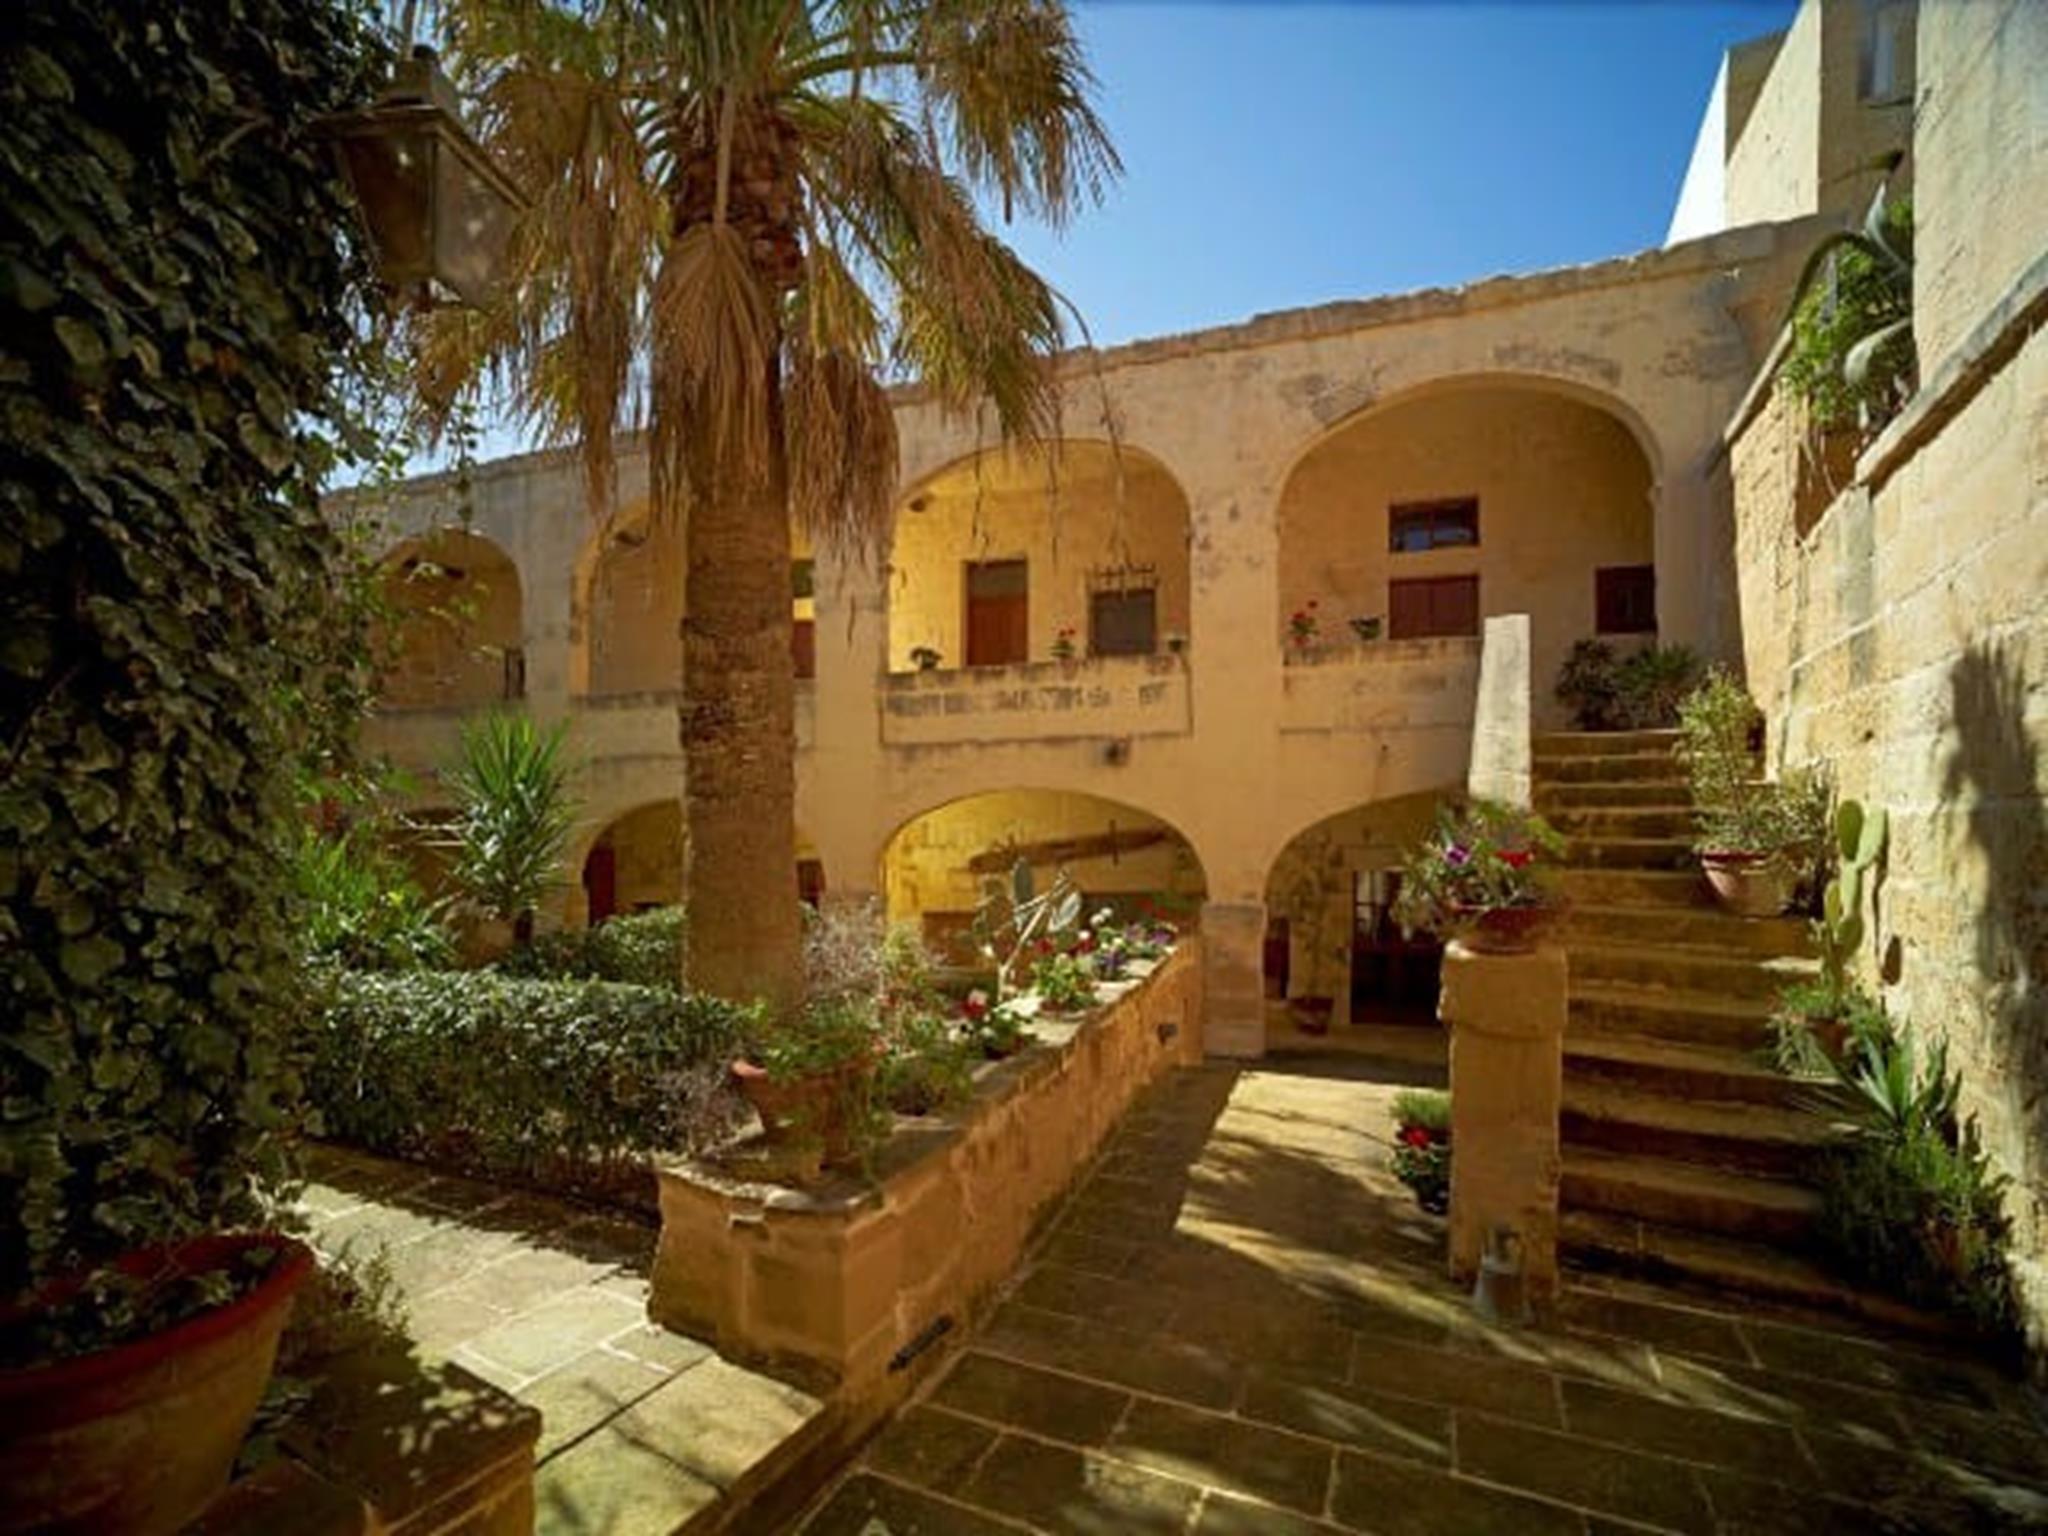 Gharb (Gozo) Farmhouse - Ref No 002968 - Image 14